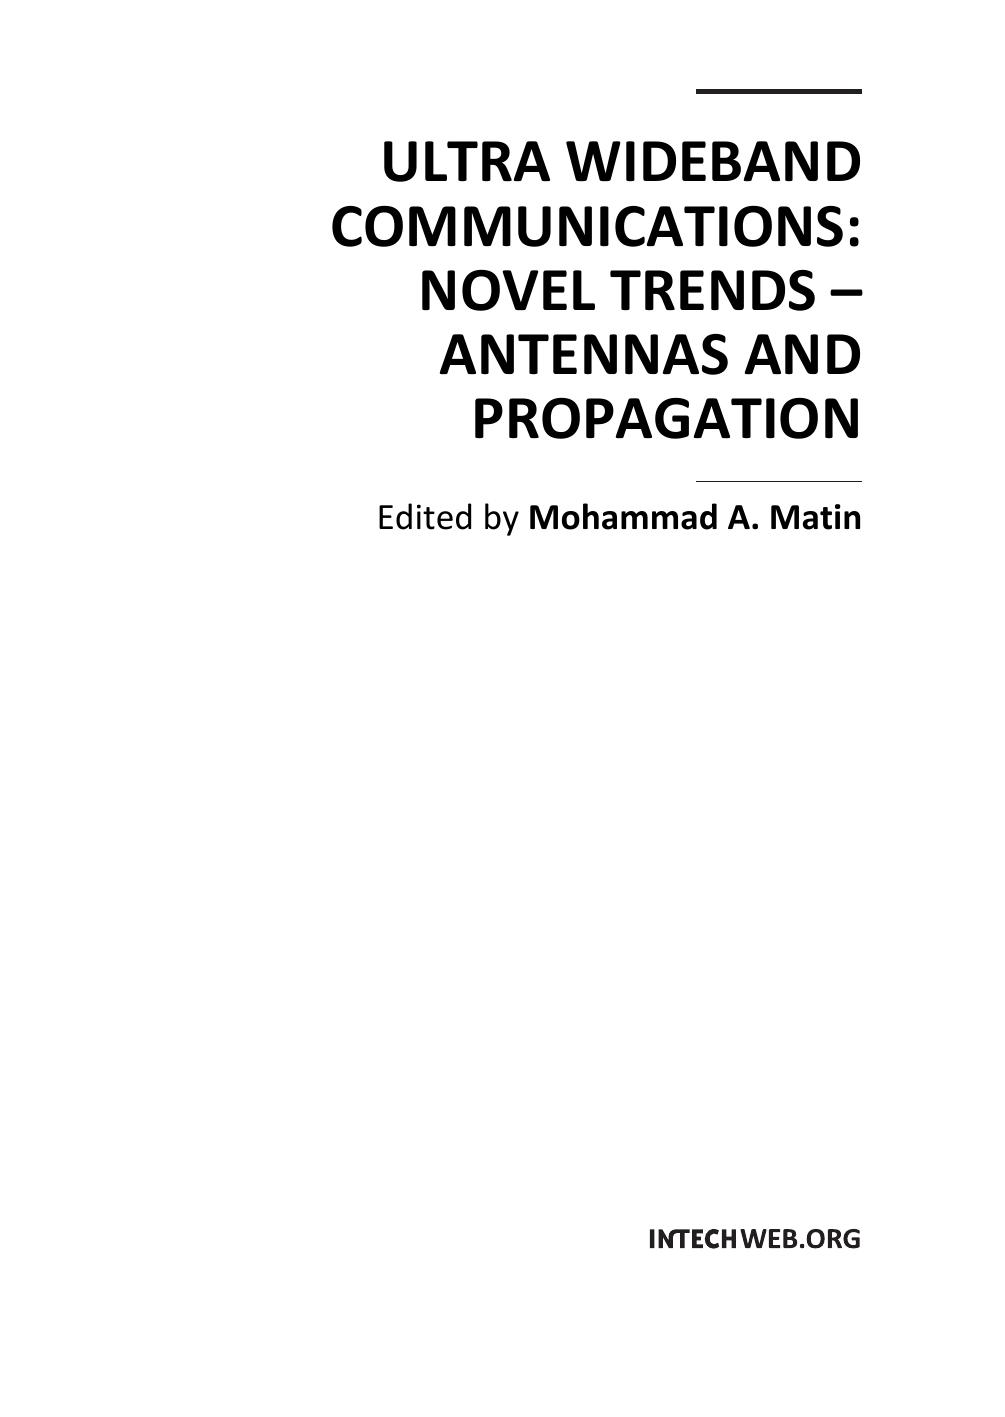 Ultra Wideband Communications Novel Trends Antennas and Propagation 2011.pdf